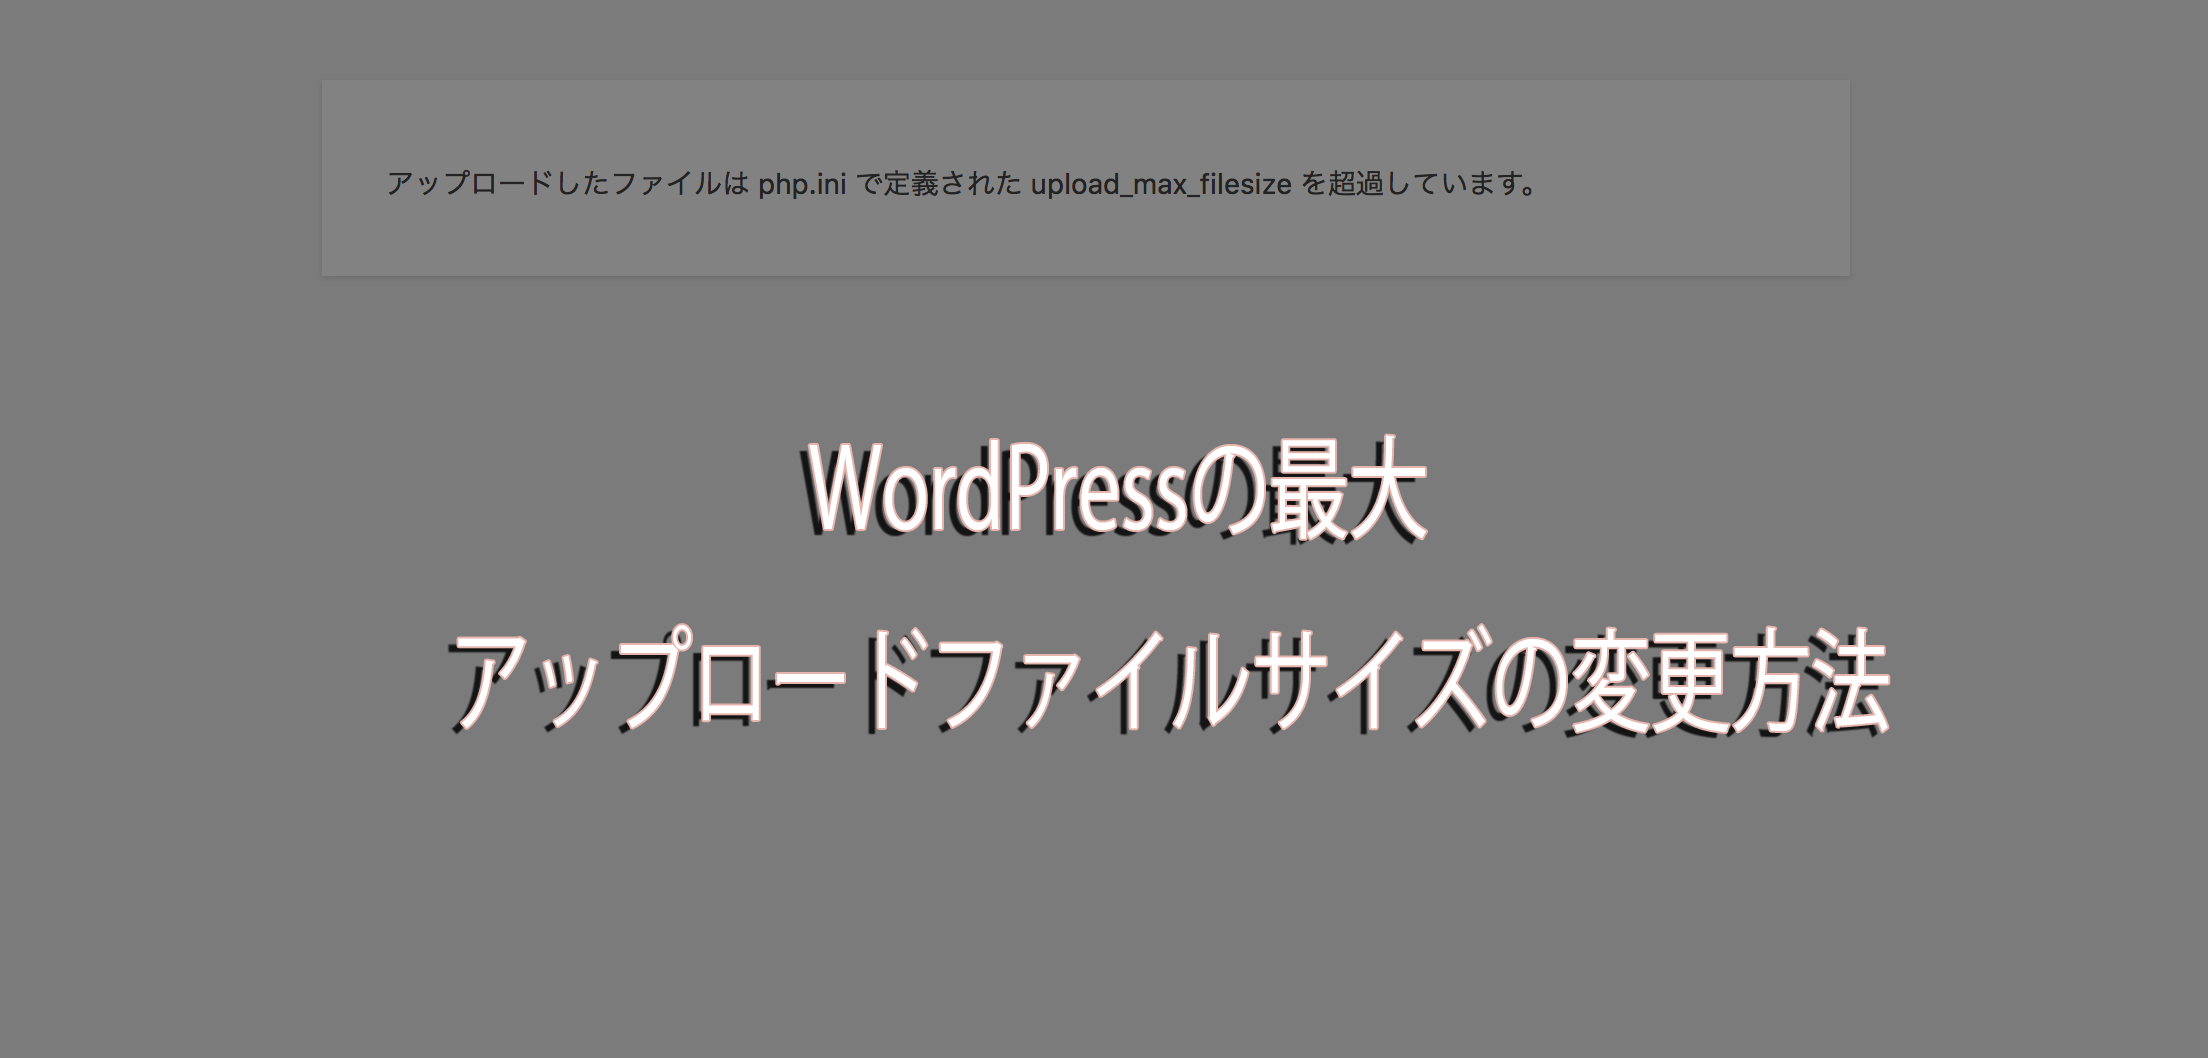 Wordpress 最大アップロードファイルサイズの変更方法 Miacat ミーアキャット